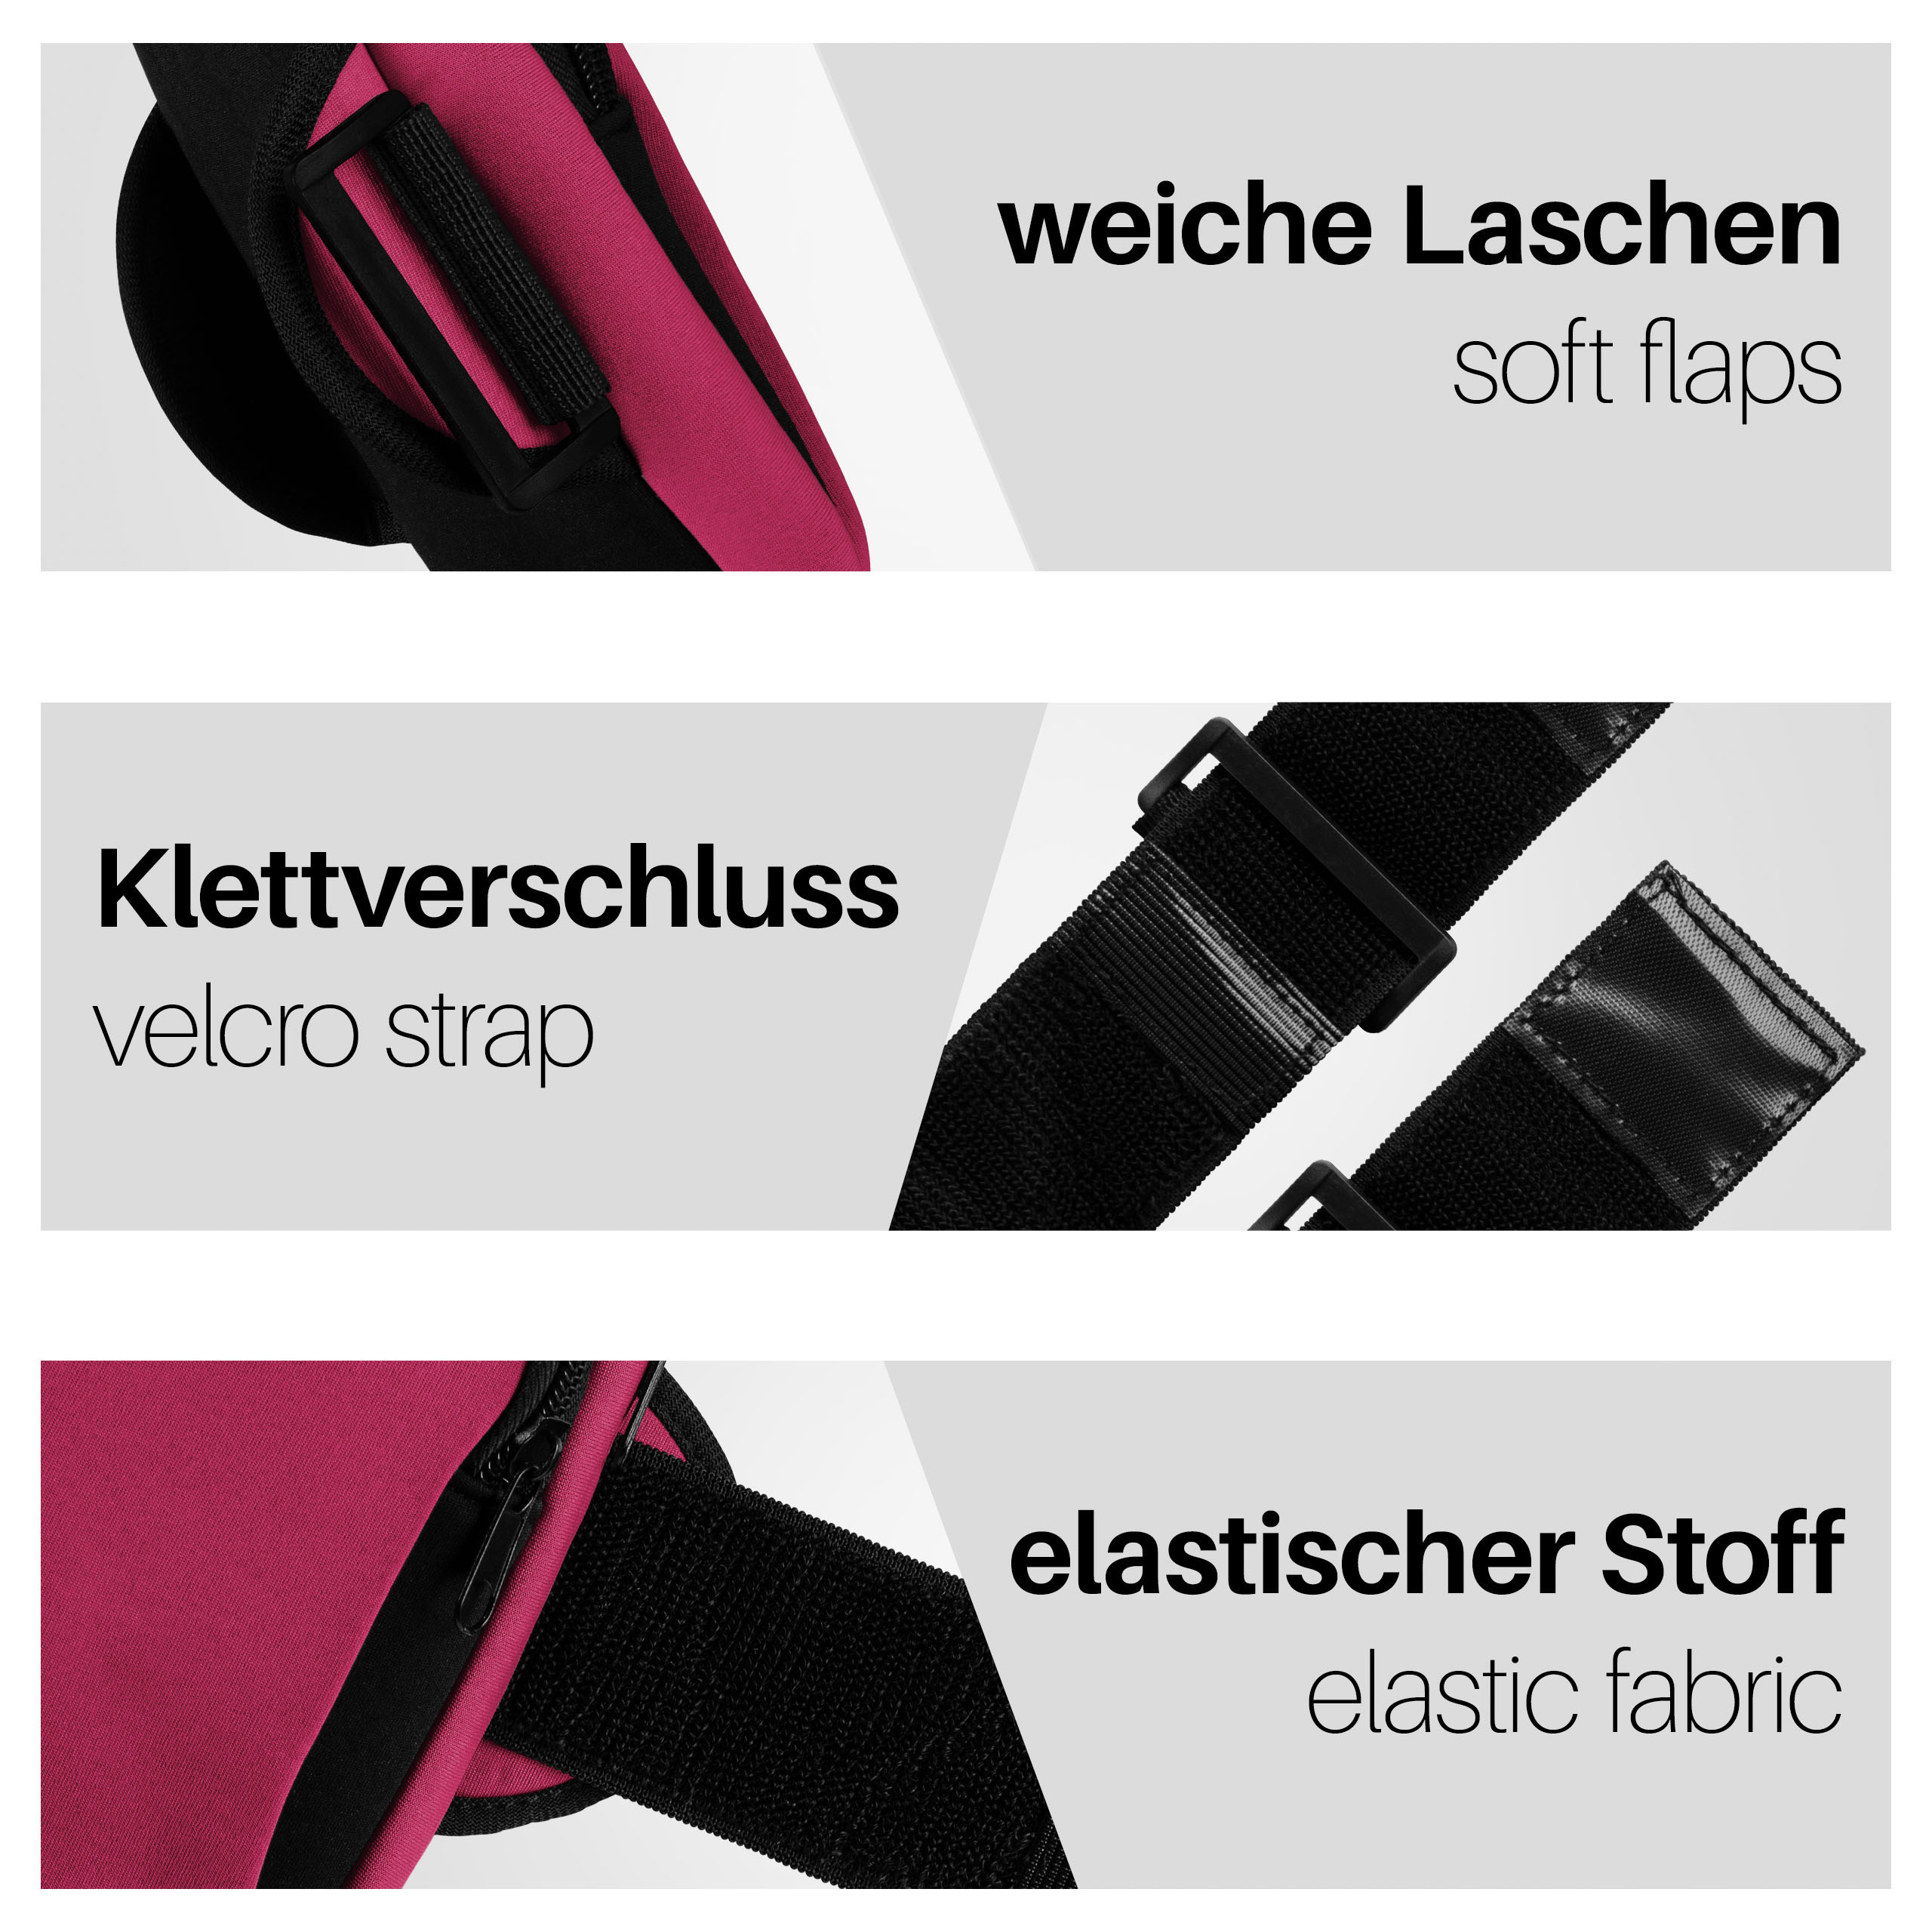 Ultra, MOEX Pink Cover, Sport Armband, Full U HTC,